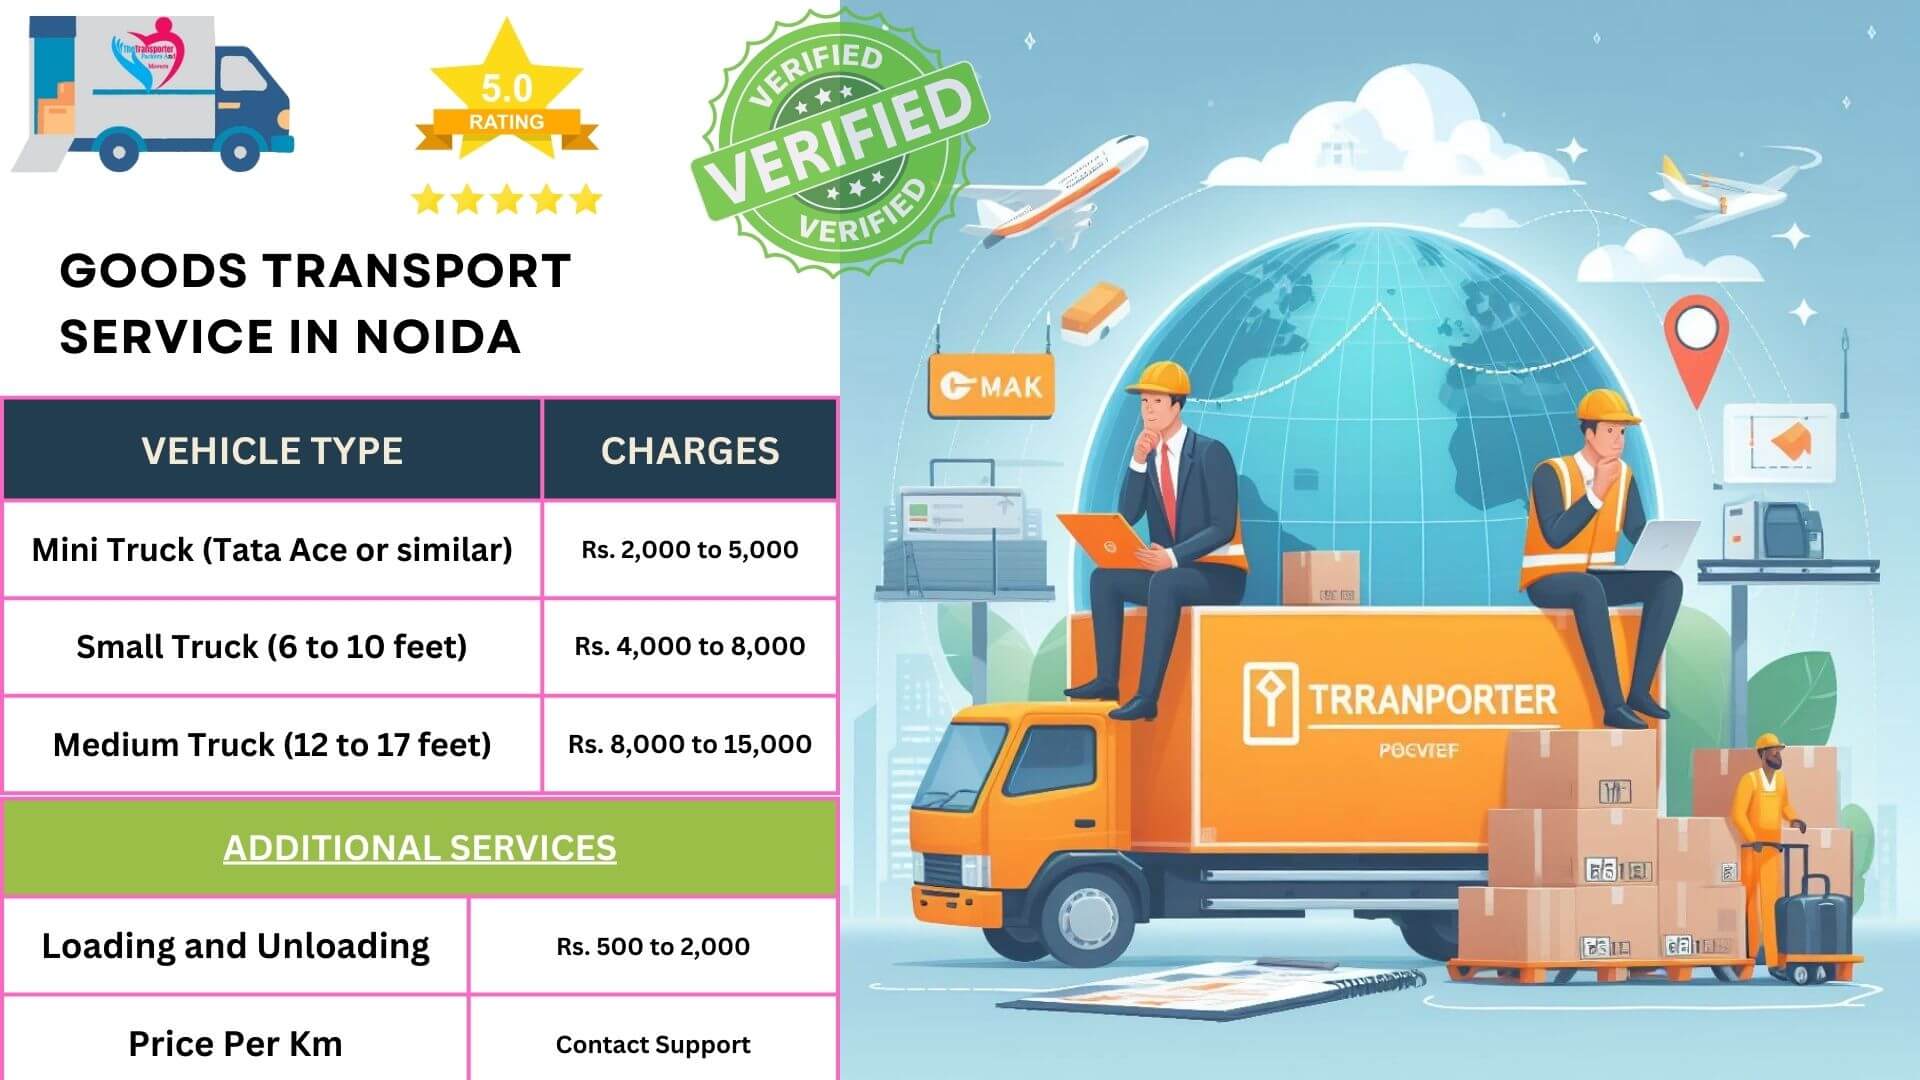 Goods transport services in Noida